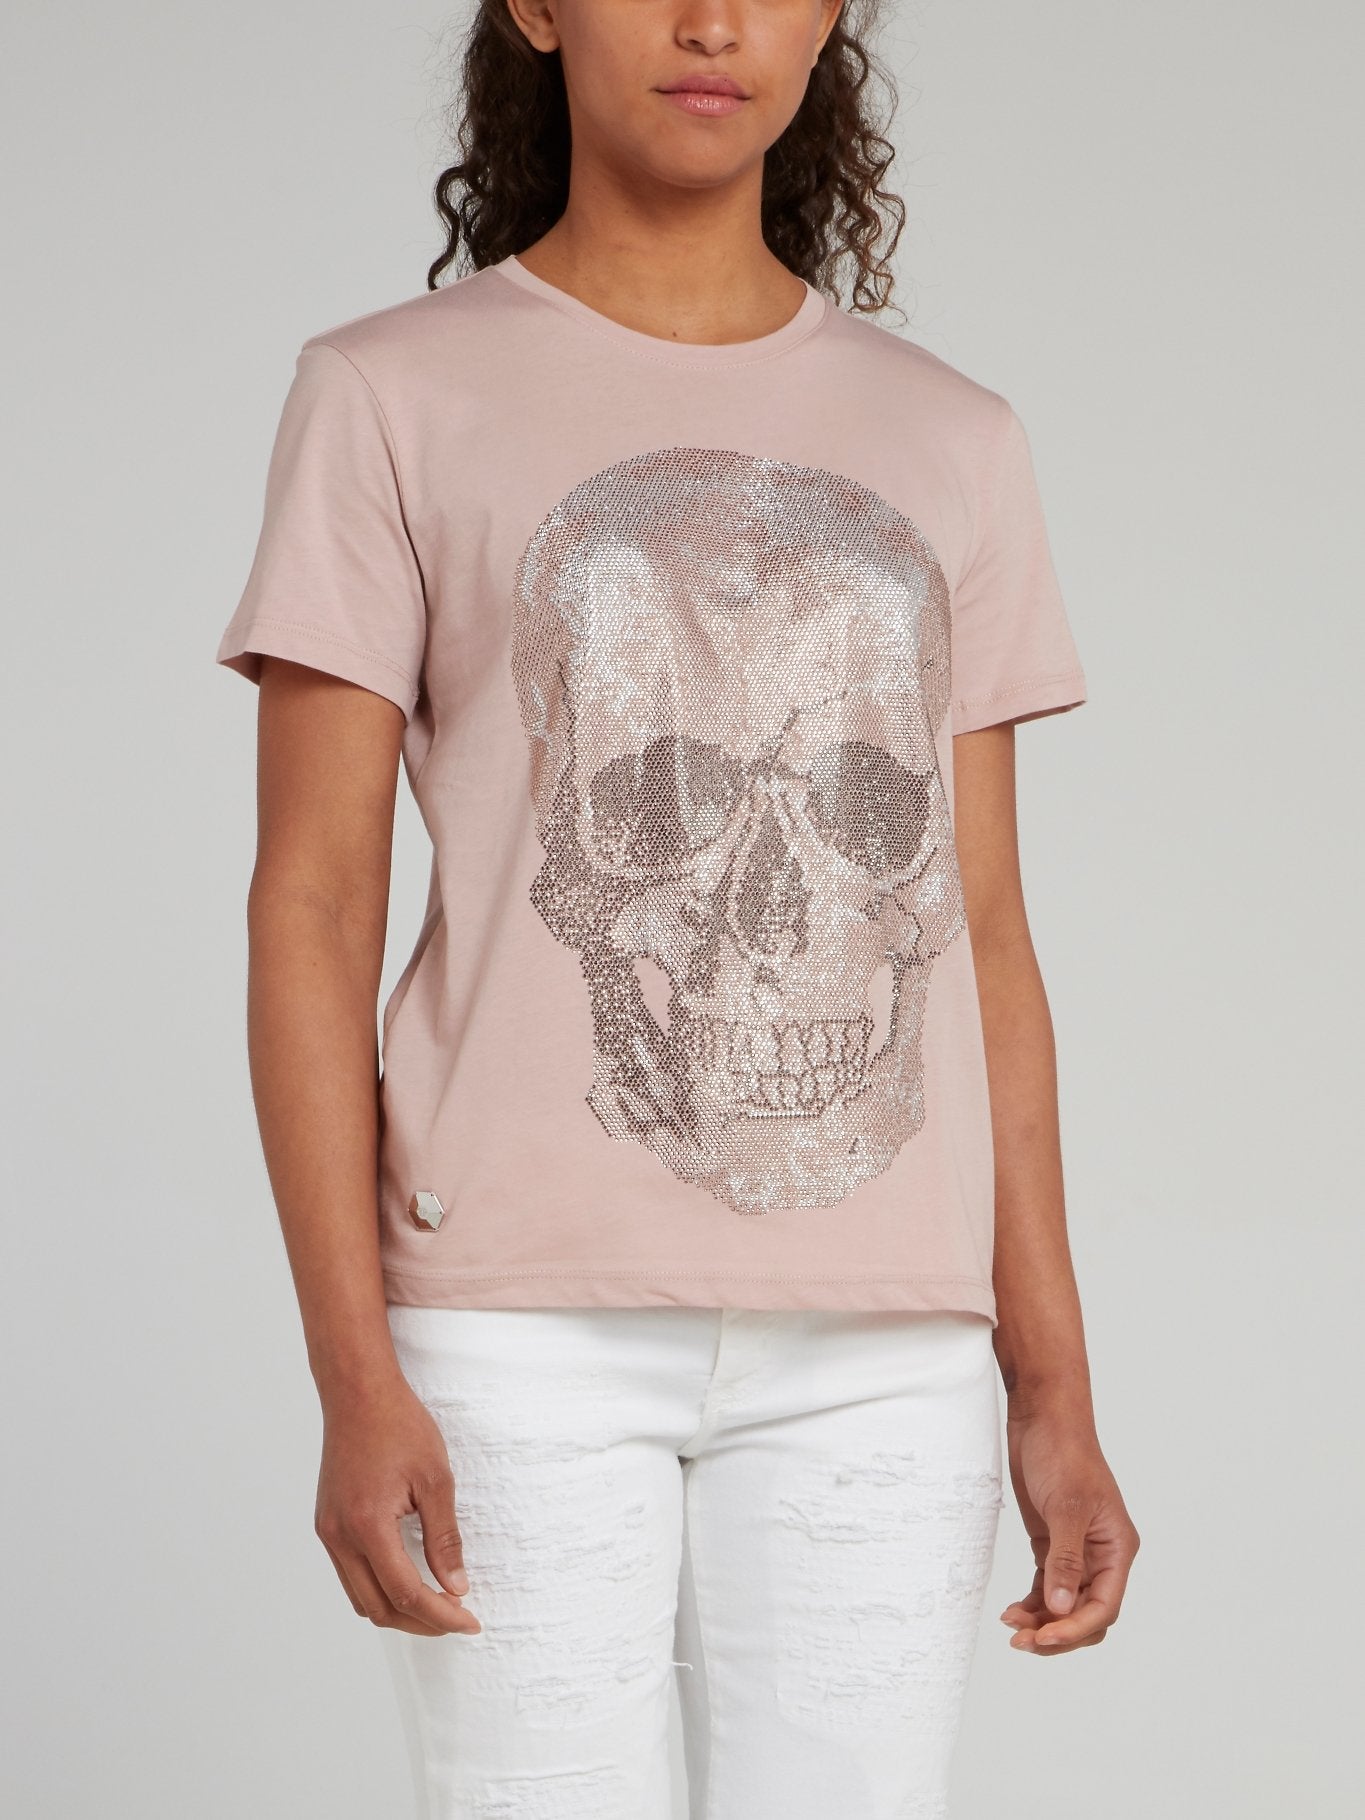 Studded Skull Cotton T-Shirt